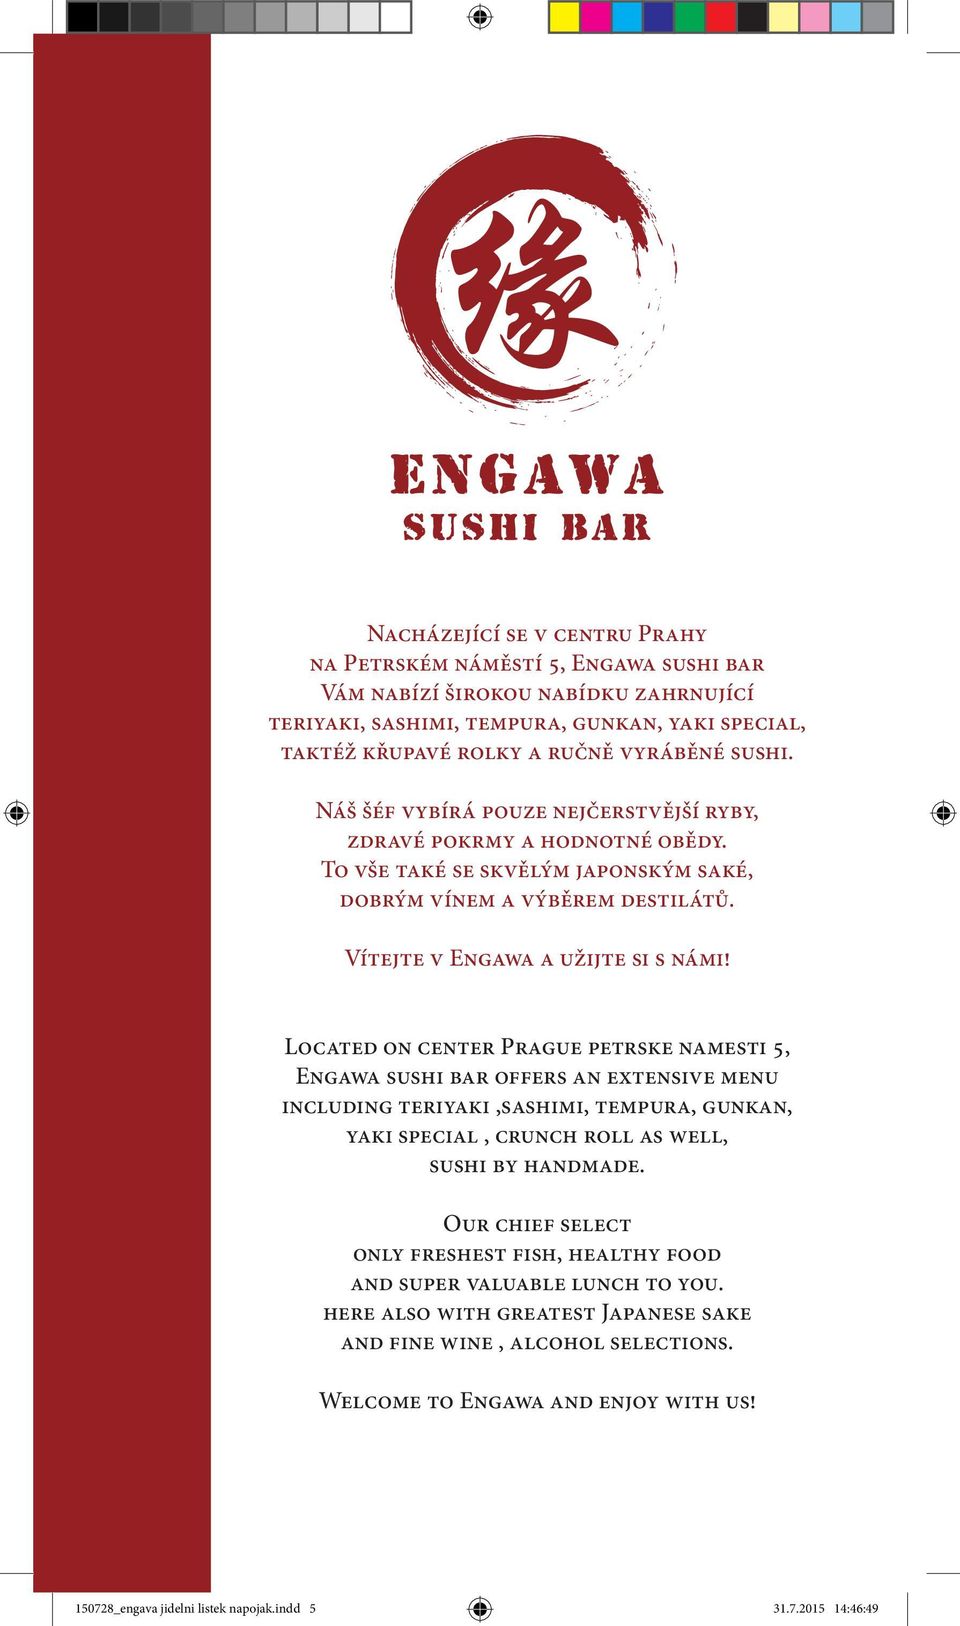 Located on center Prague petrske namesti 5, Engawa sushi bar offers an extensive menu including teriyaki,sashimi, tempura, gunkan, yaki special, crunch roll as well, sushi by handmade.